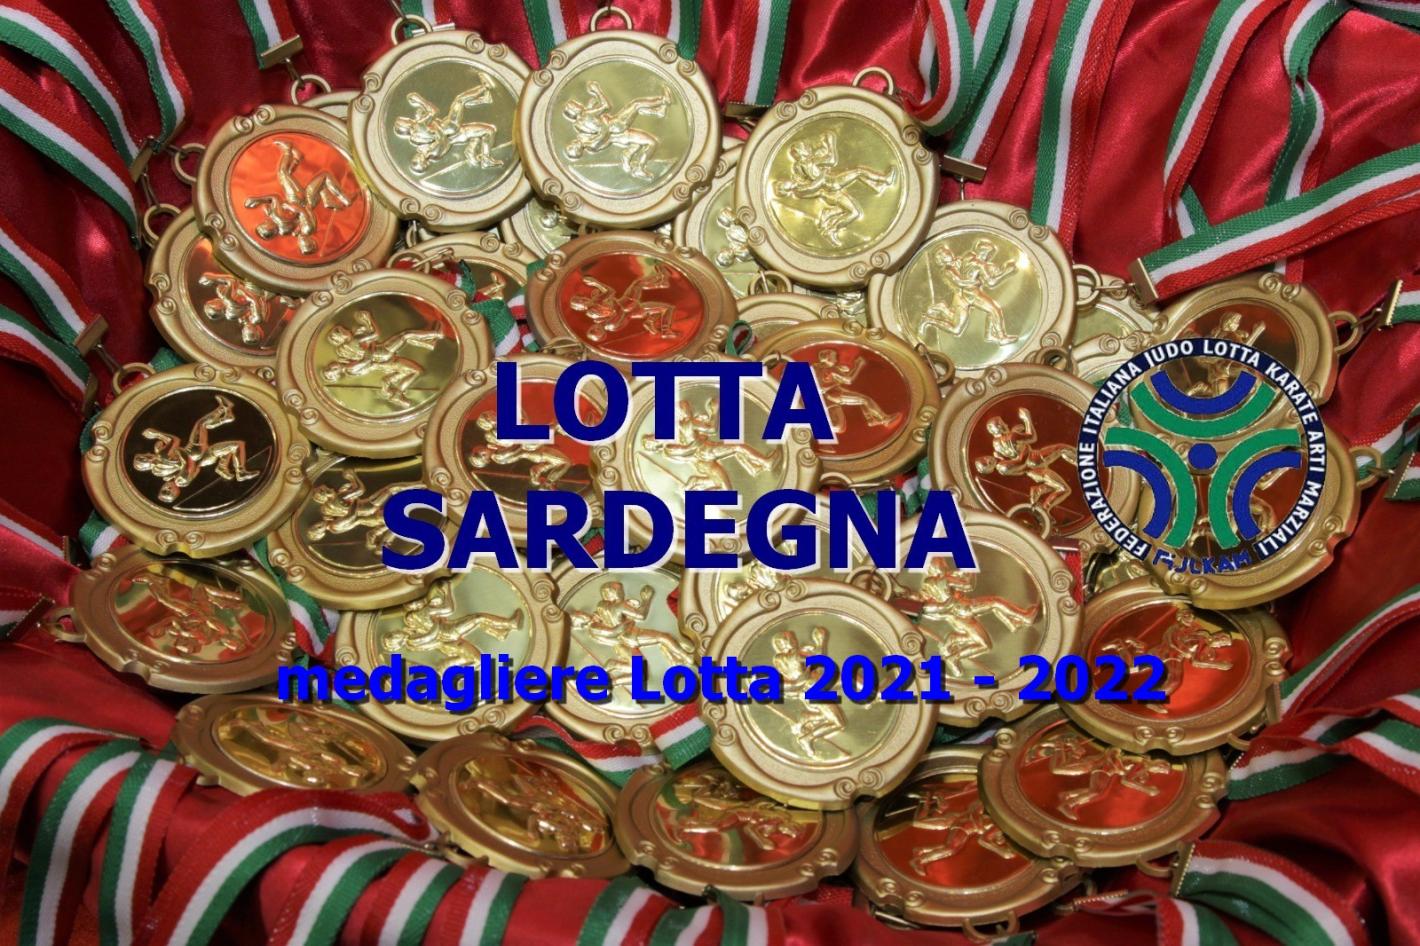 images/sardegna/Settore_Lotta/2023/20230107_Medagliere_Lotta_2022/medium/Foto_medaglie_Lotta_mod_1.jpeg